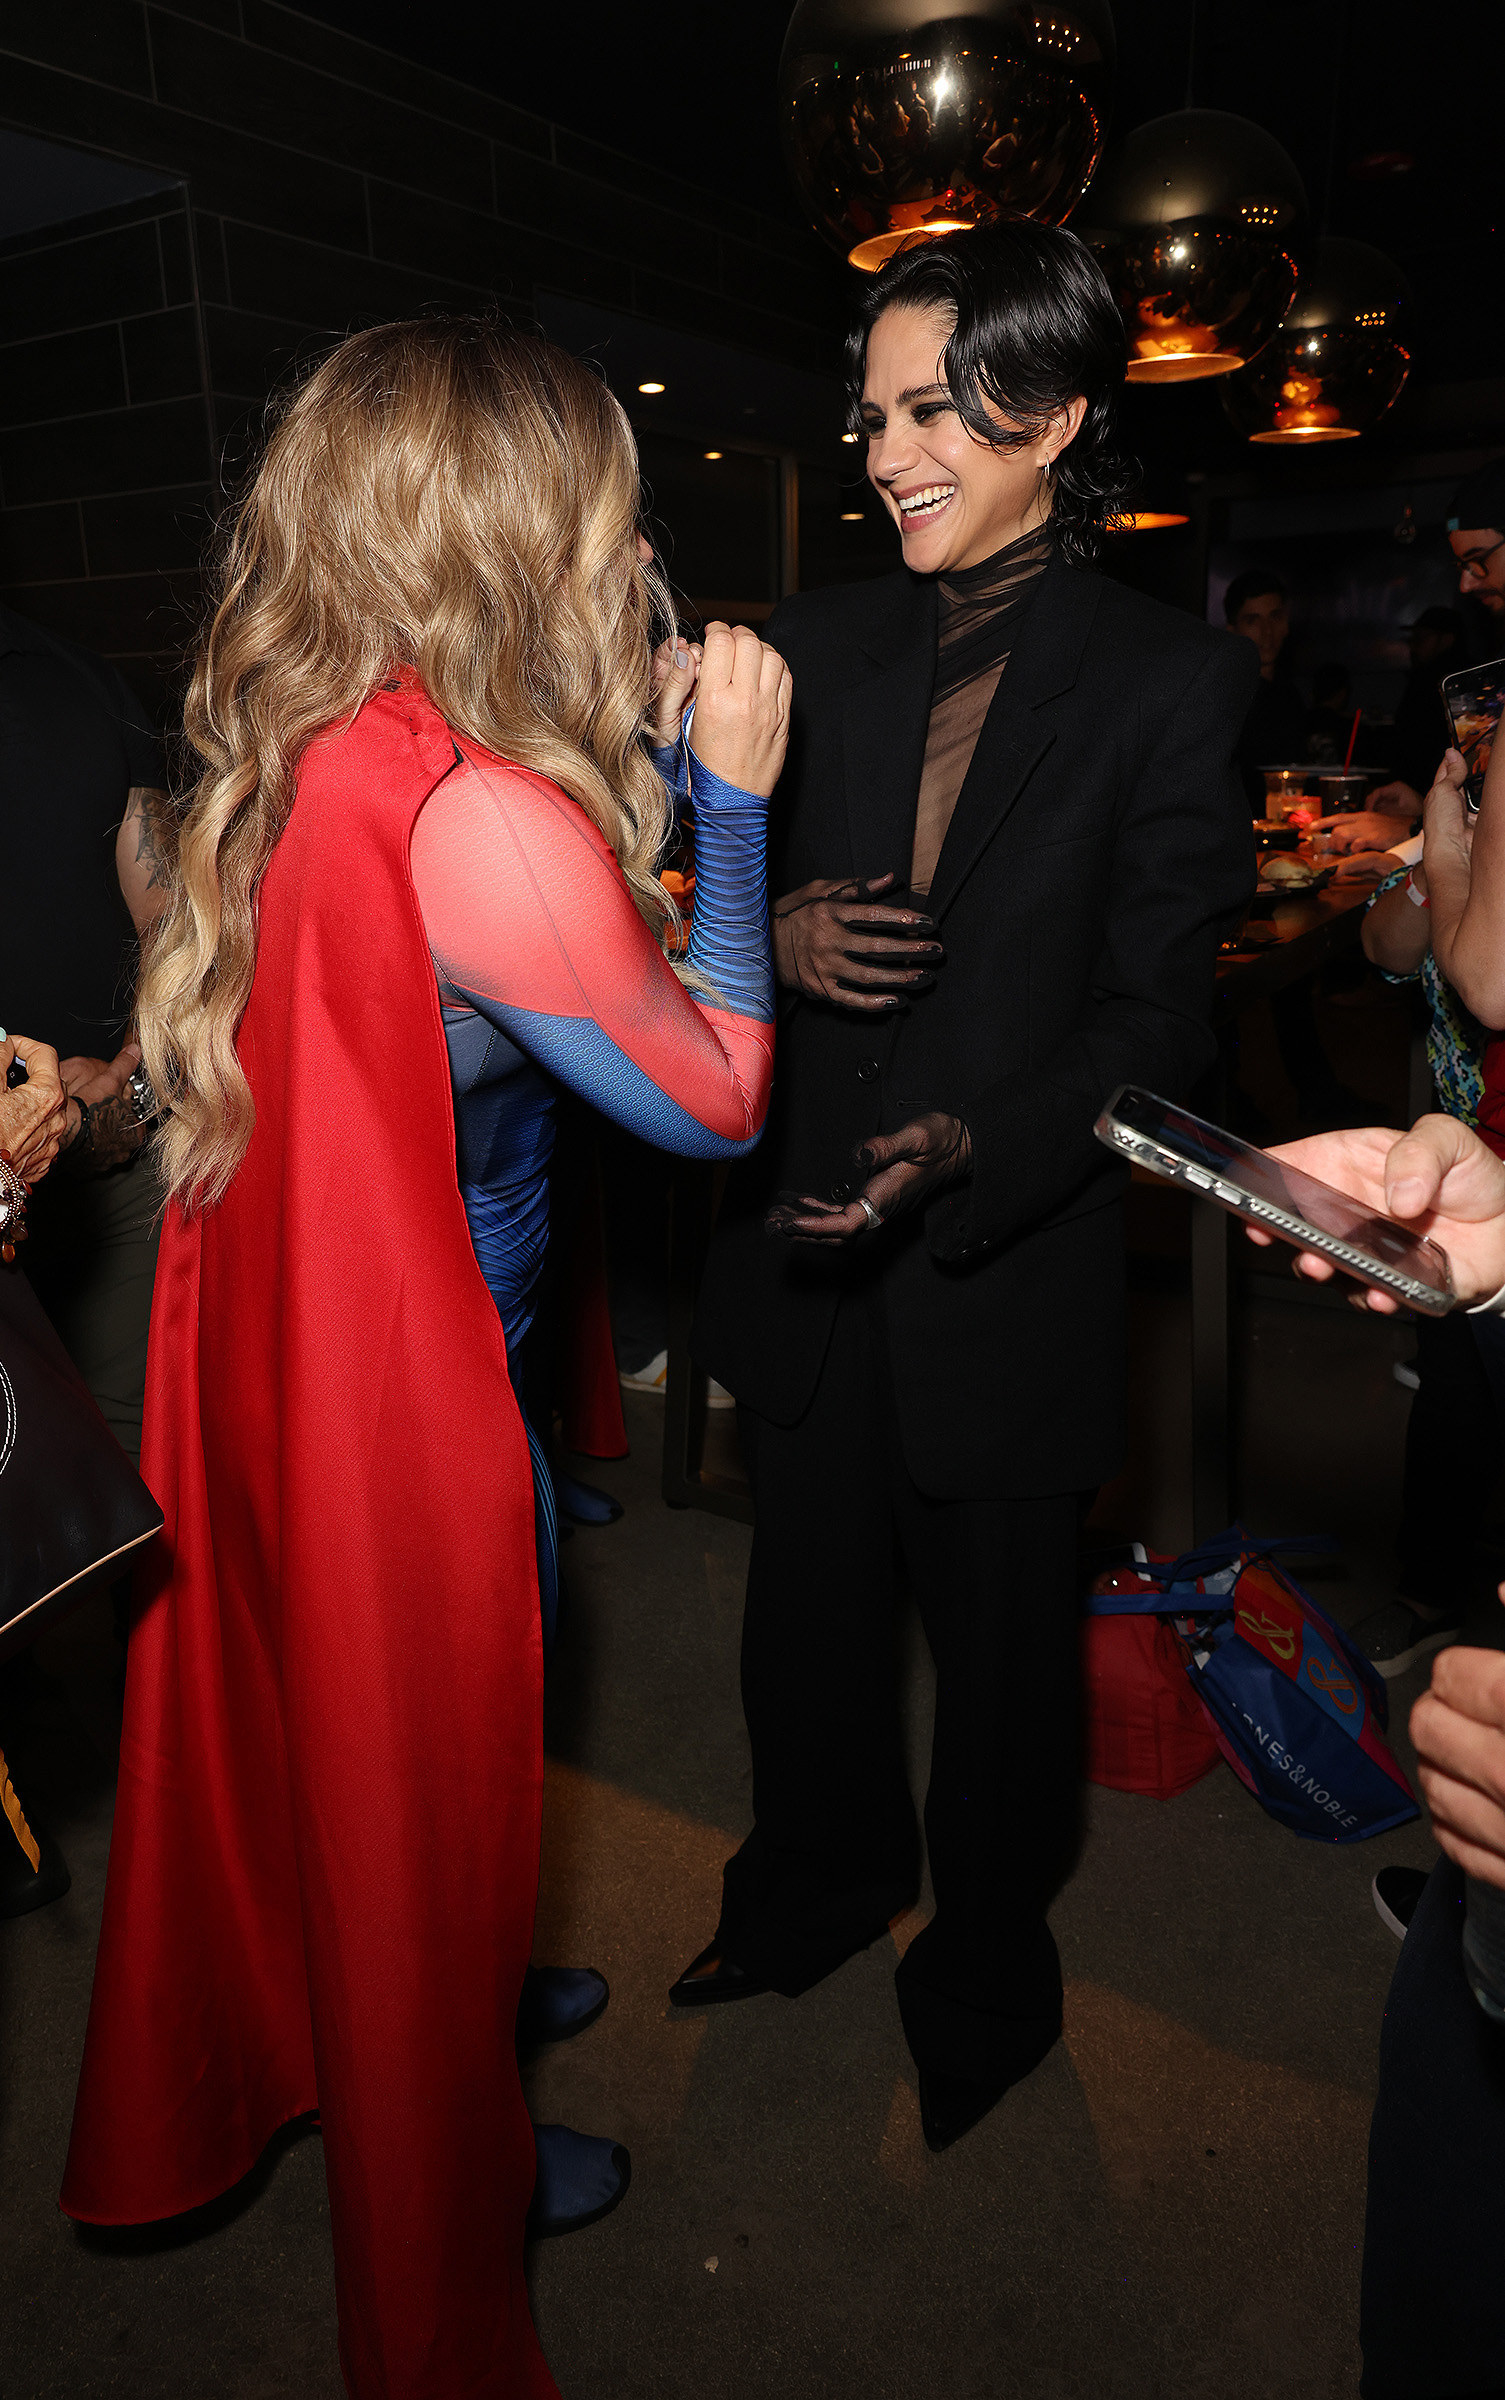 People meeting her dressed up as supergirl